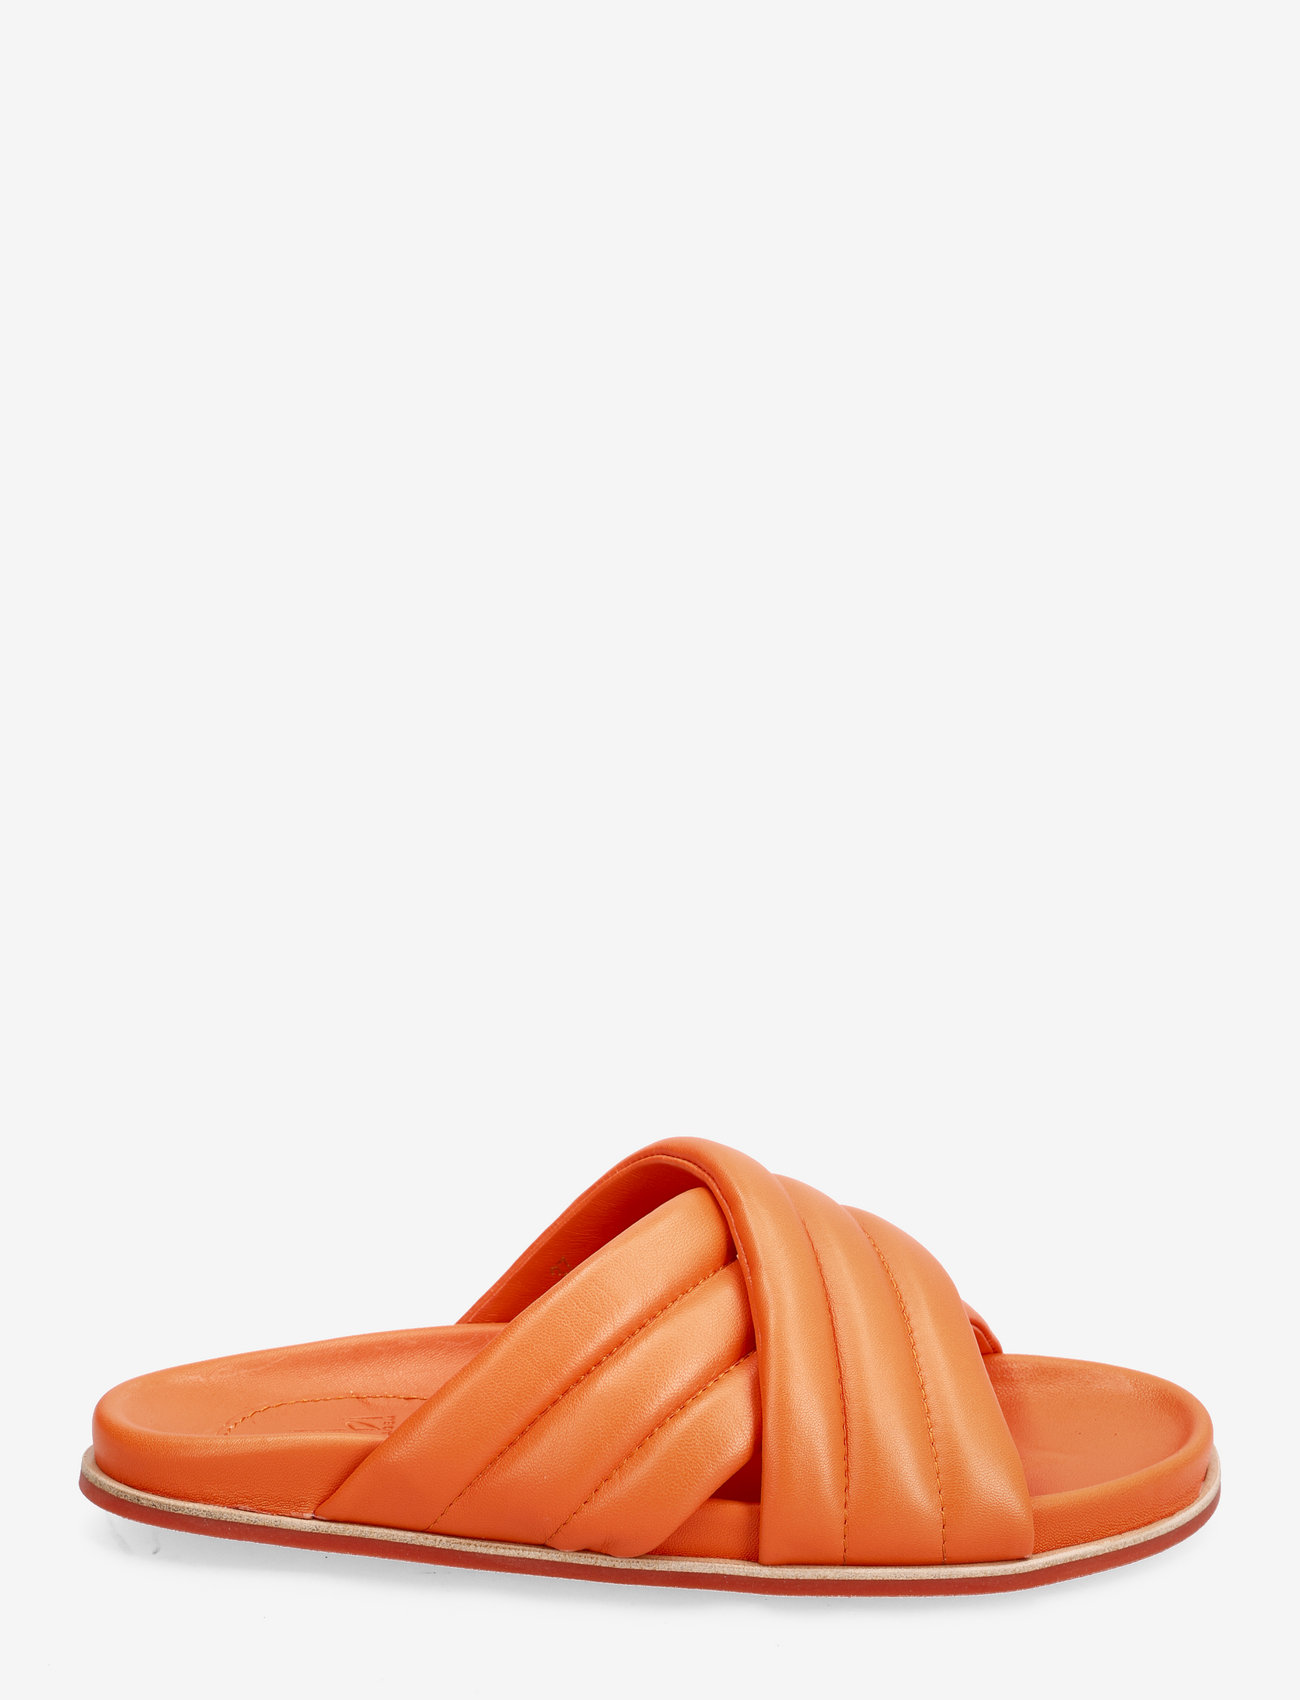 Billi Bi - C5573 - platte sandalen - orange nappa - 1